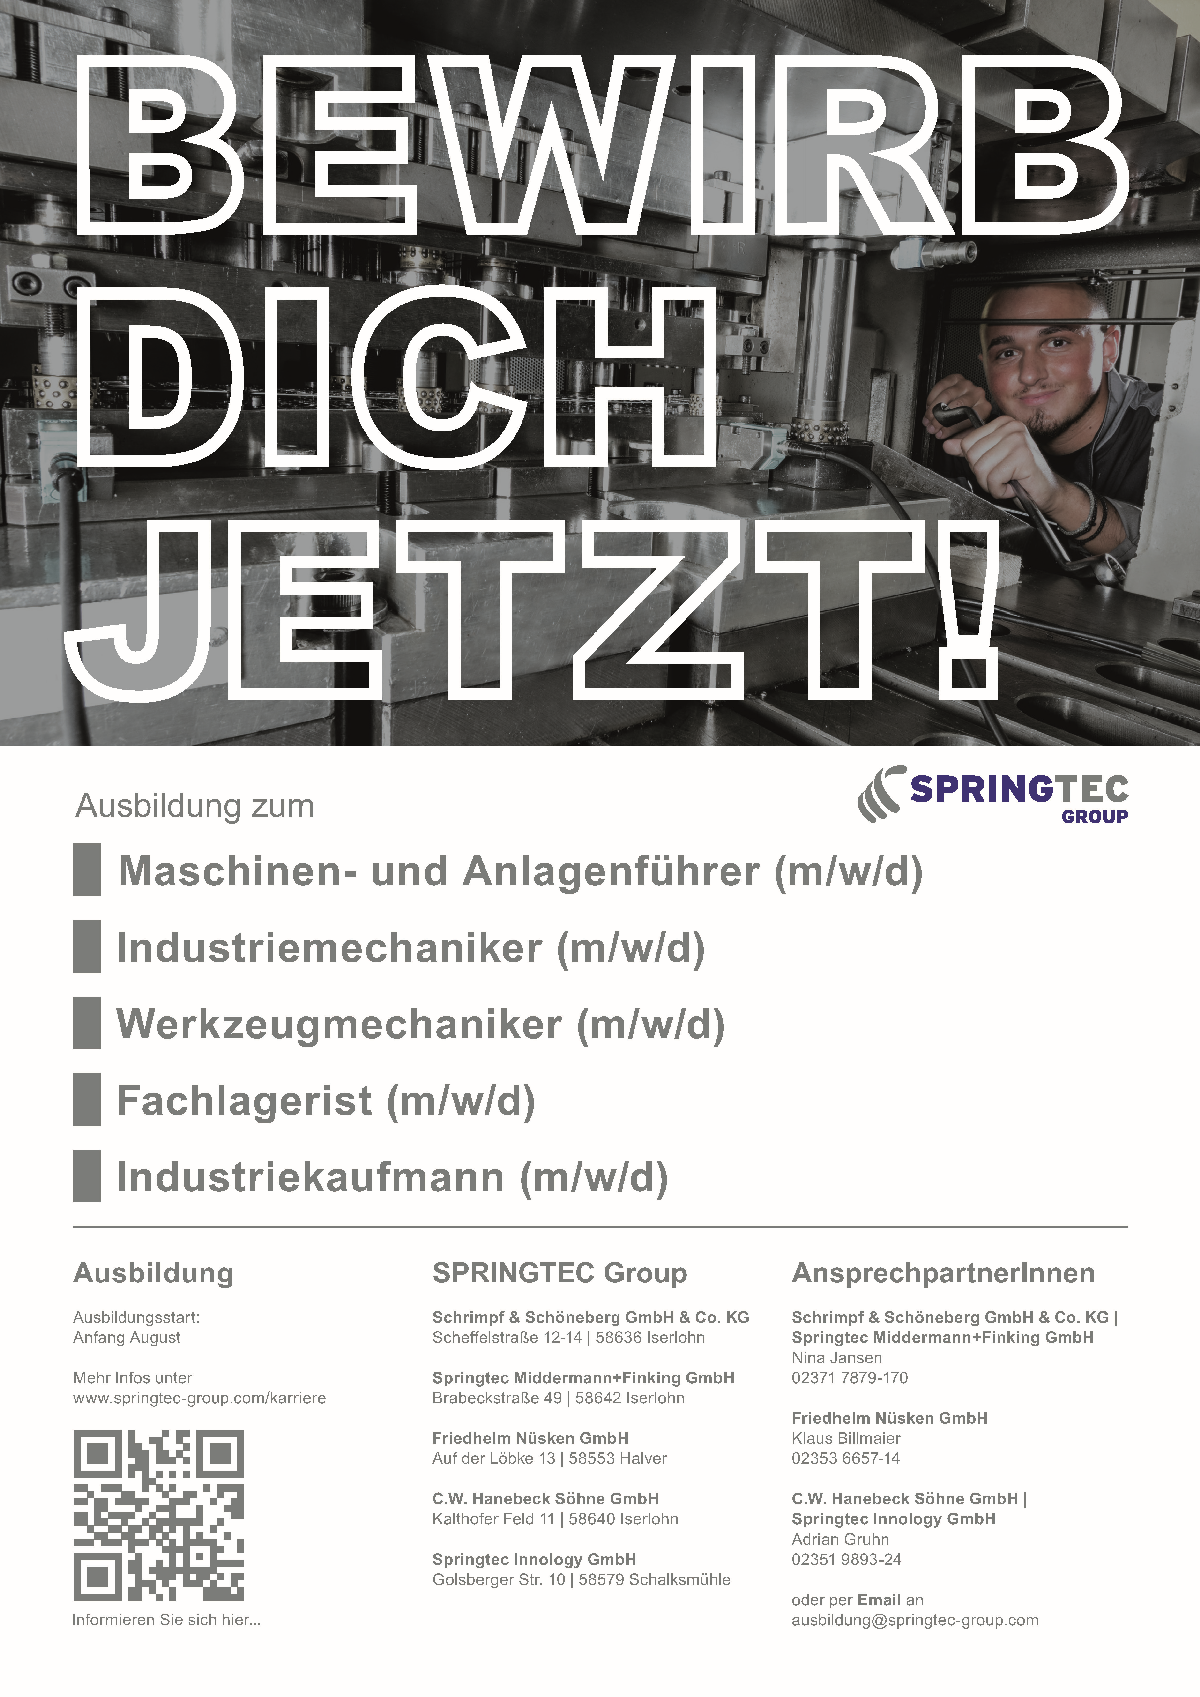 Springtec Middermann+Finking GmbH